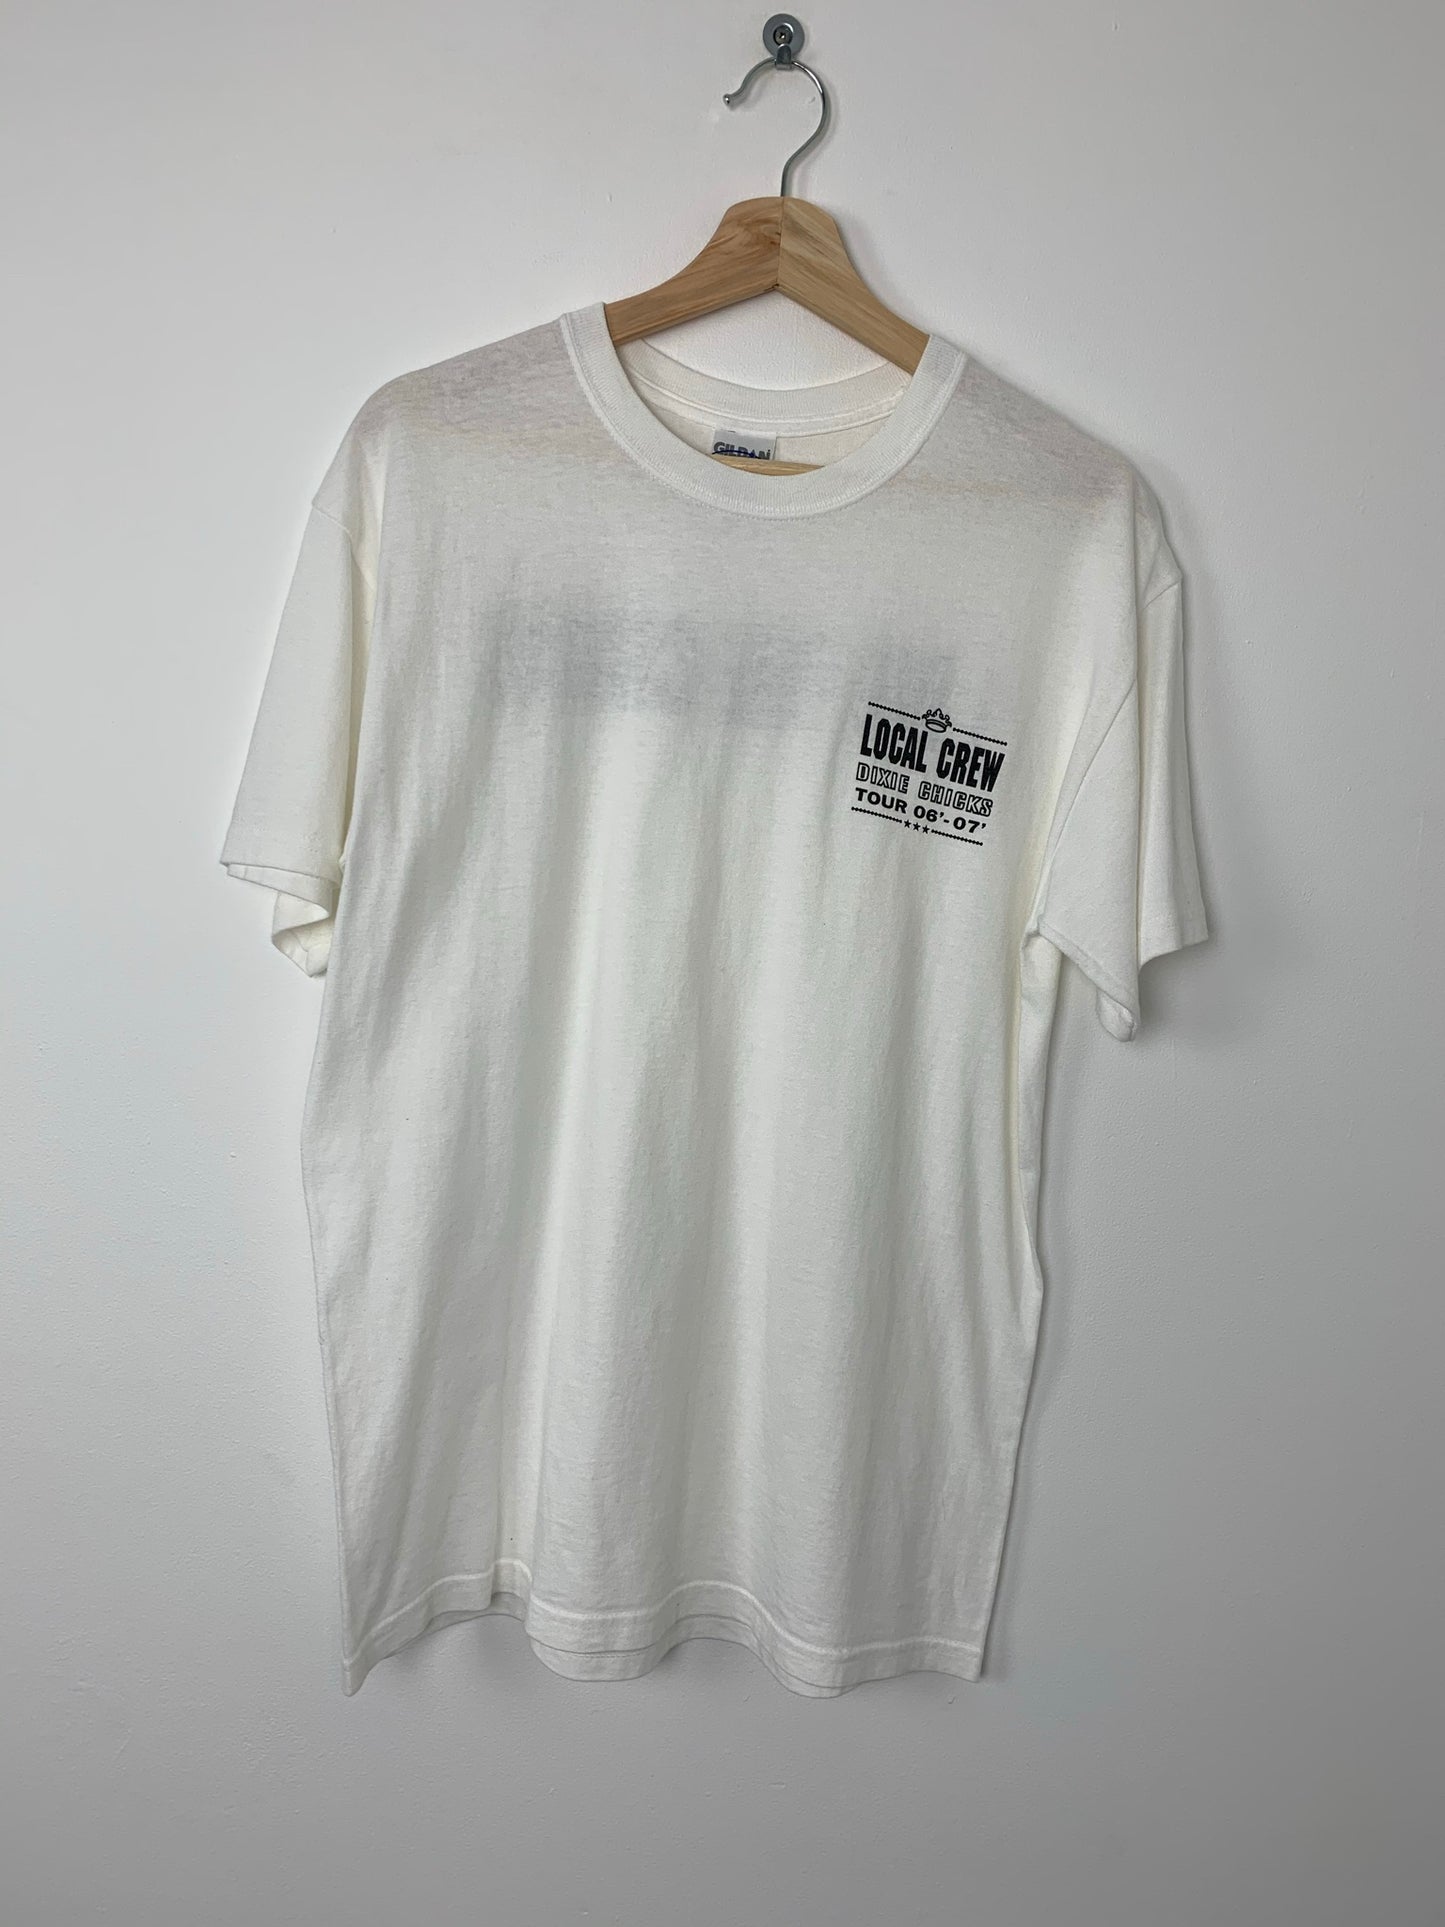 Dixie Chicks Local Crew 2006 - 2007 Tour T-Shirt (White)